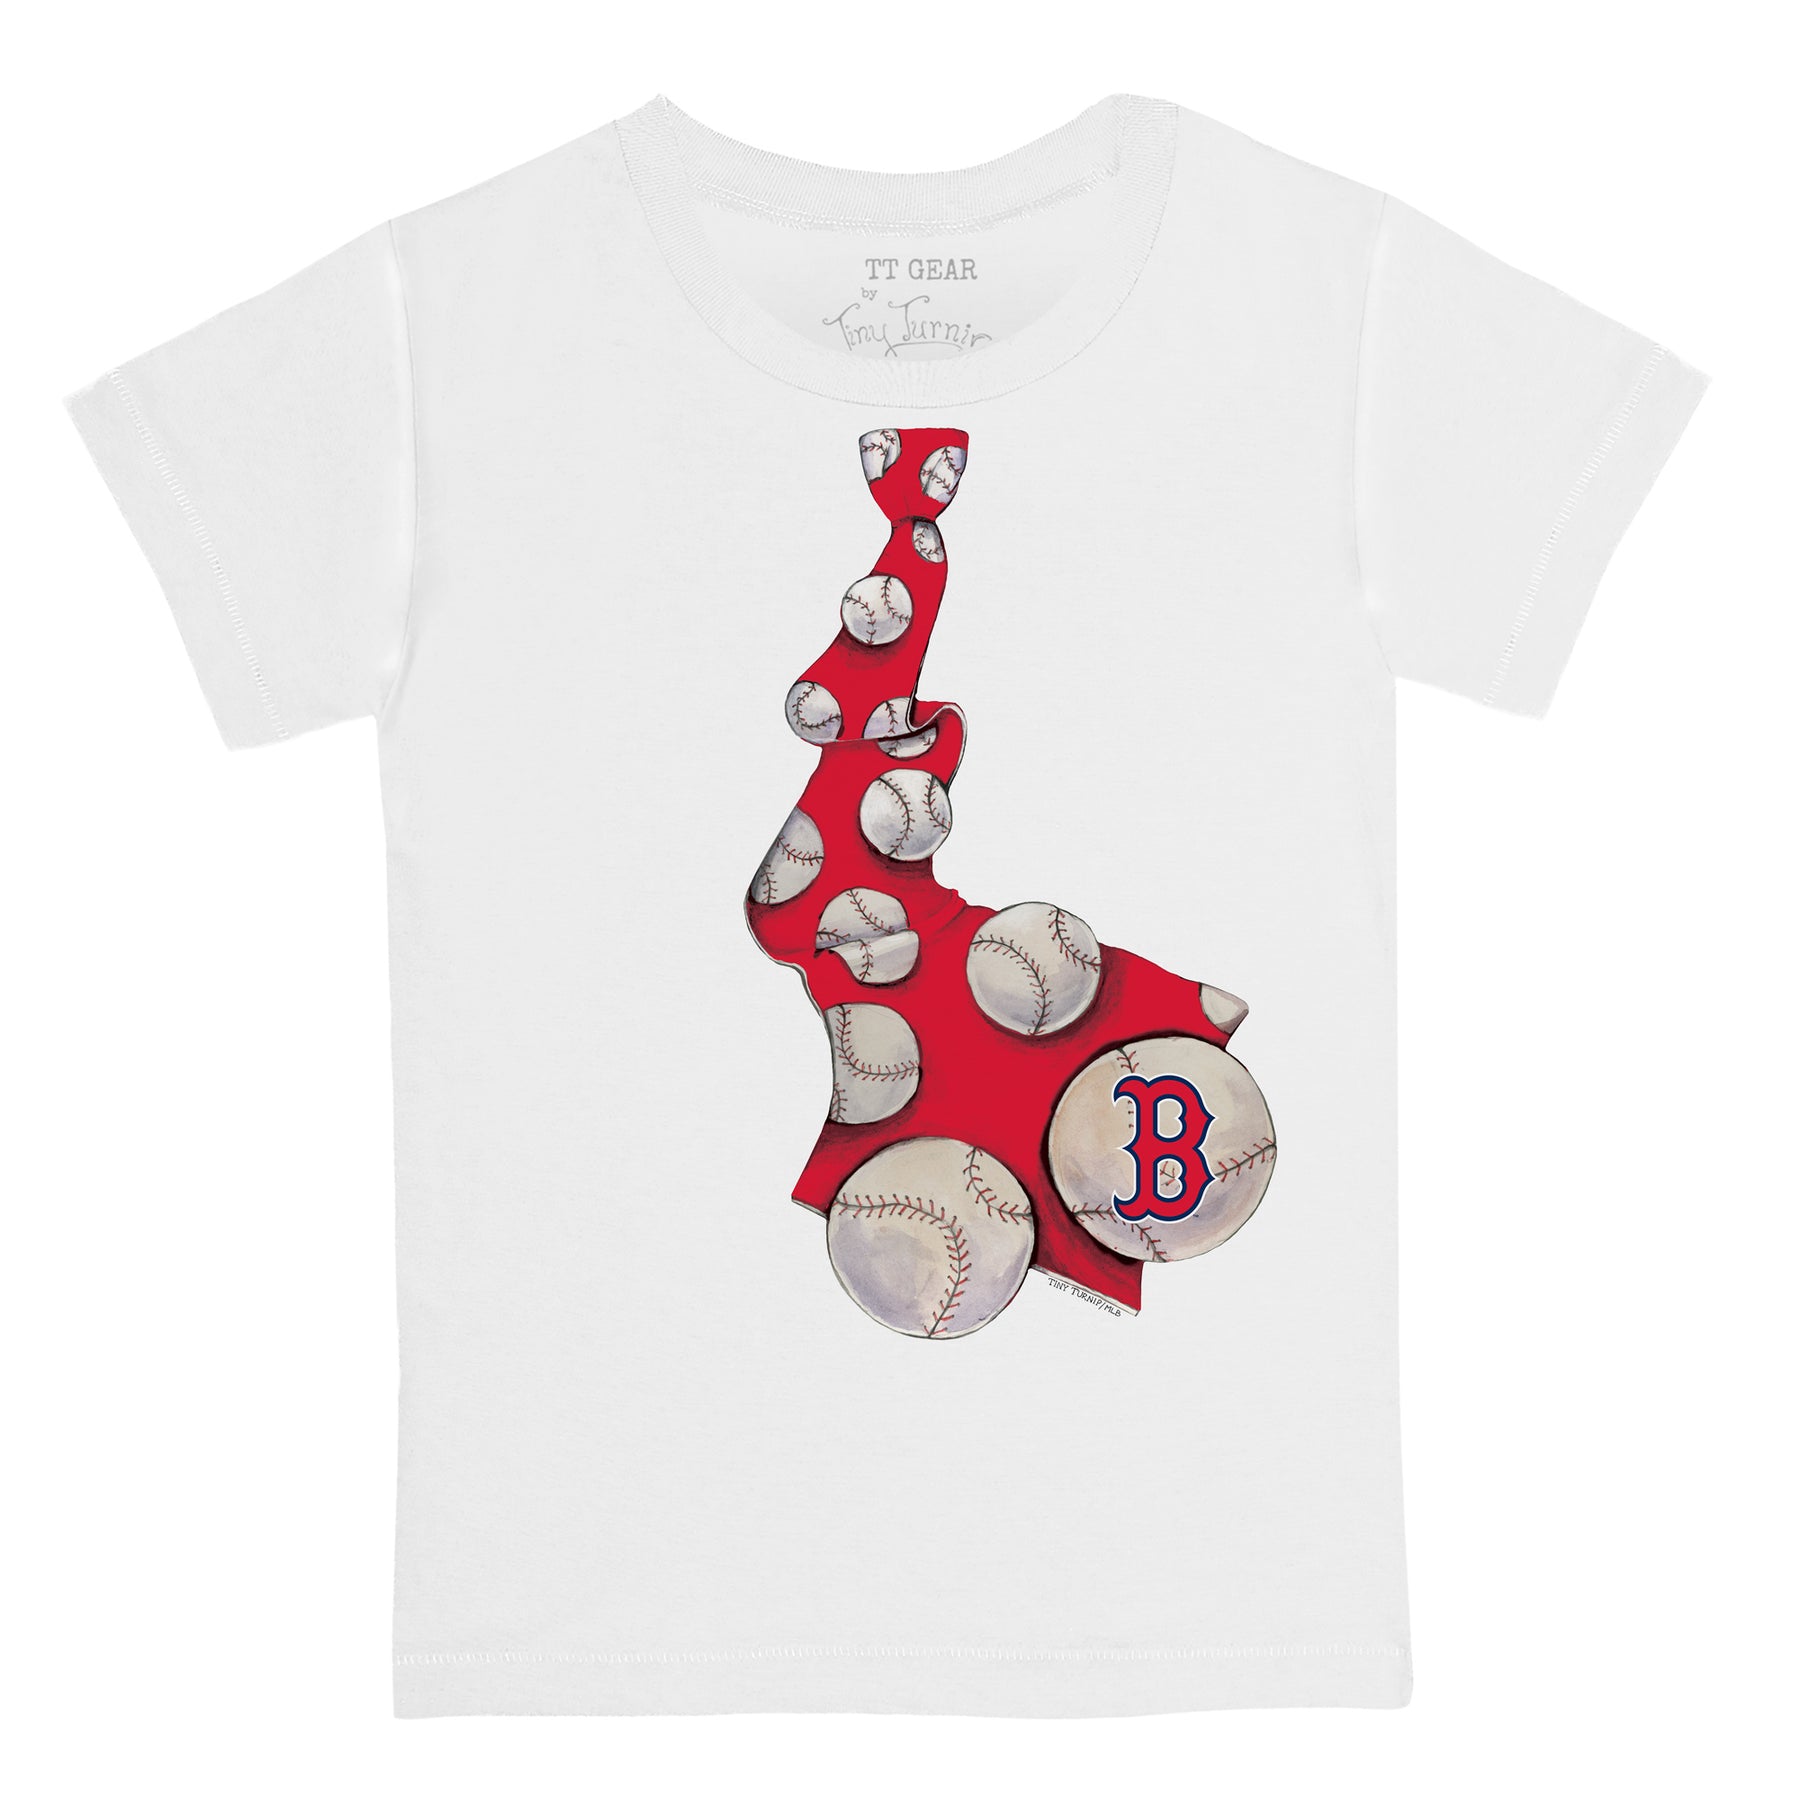 Boston Red Sox Baseball Tie Tee Shirt